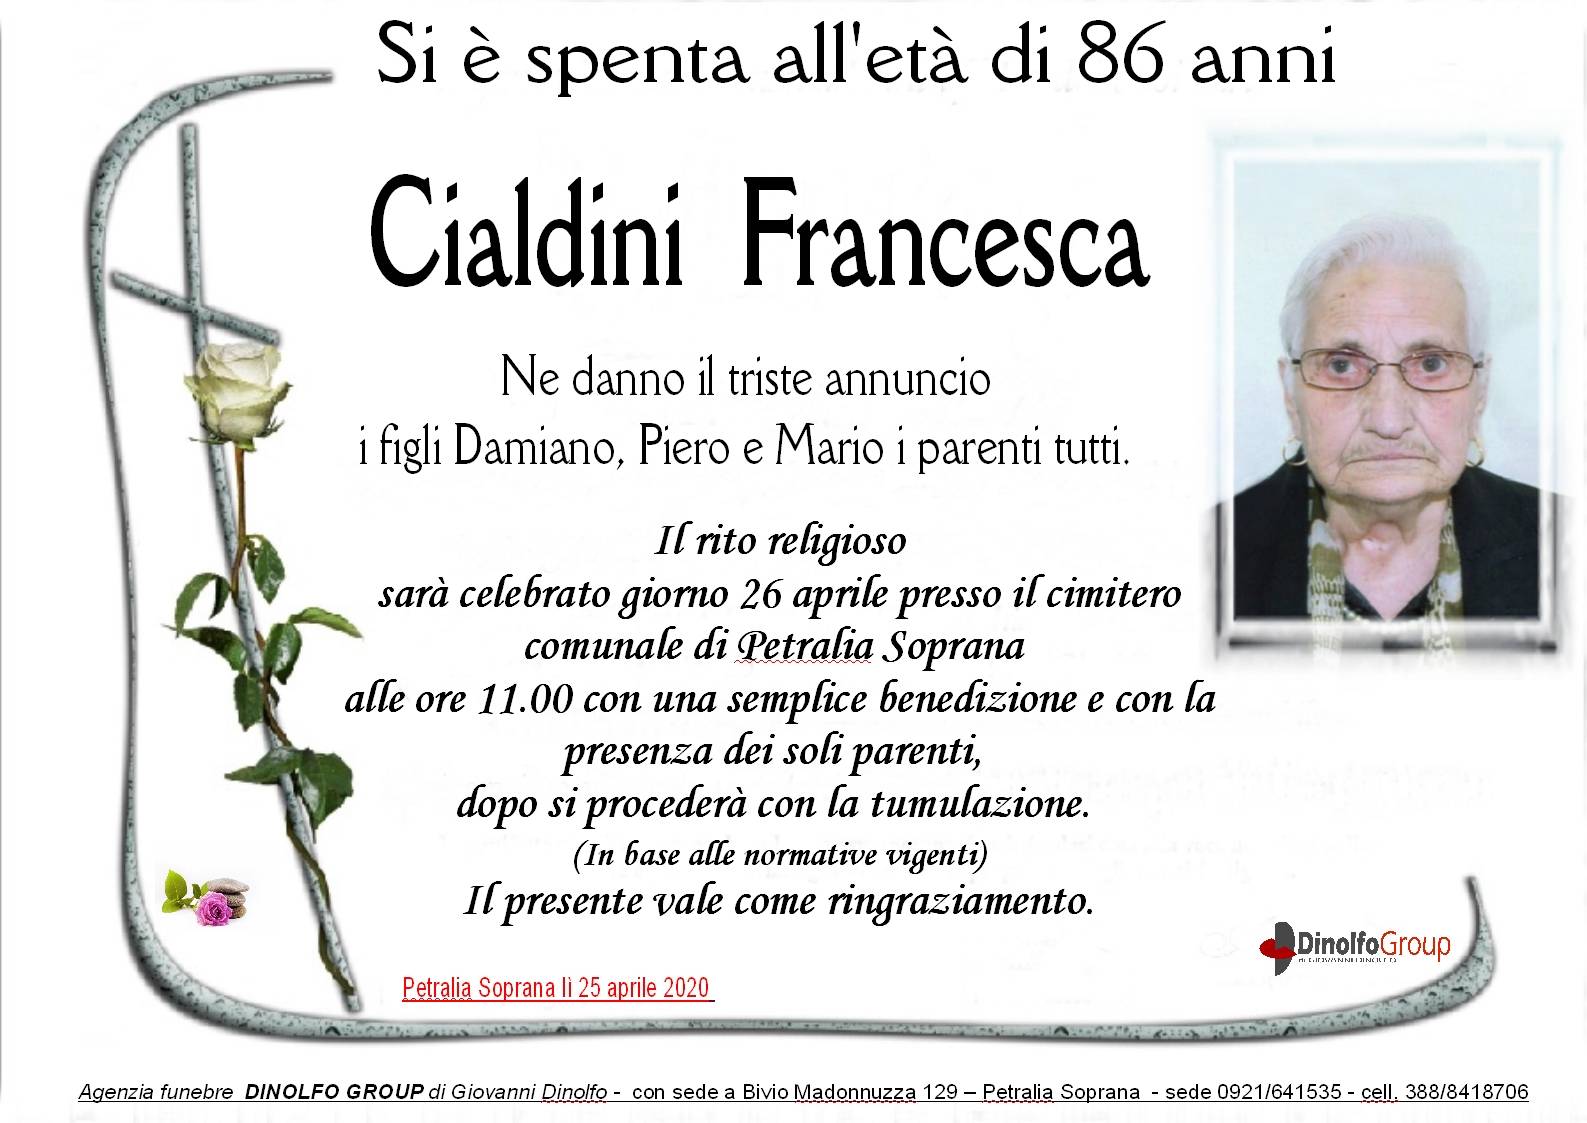 Francesca Cialdini